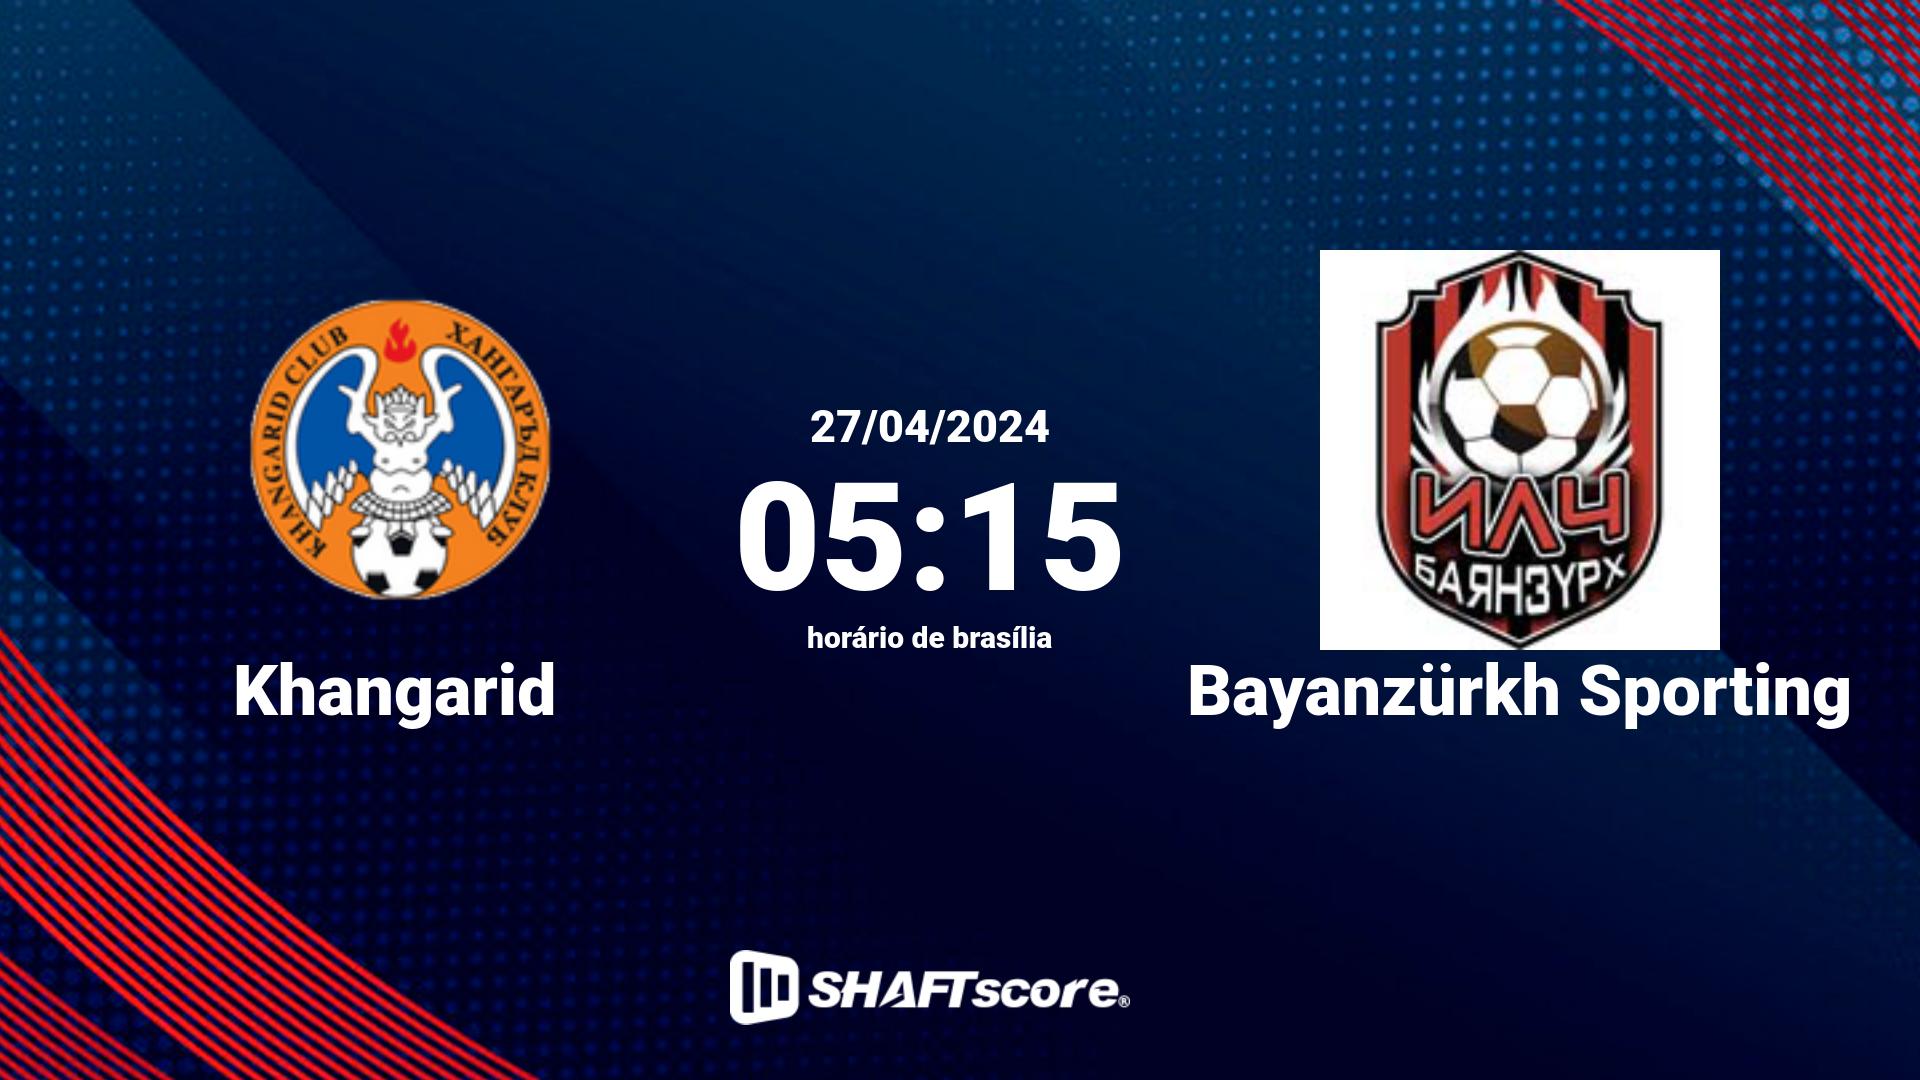 Estatísticas do jogo Khangarid vs Bayanzürkh Sporting 27.04 05:15